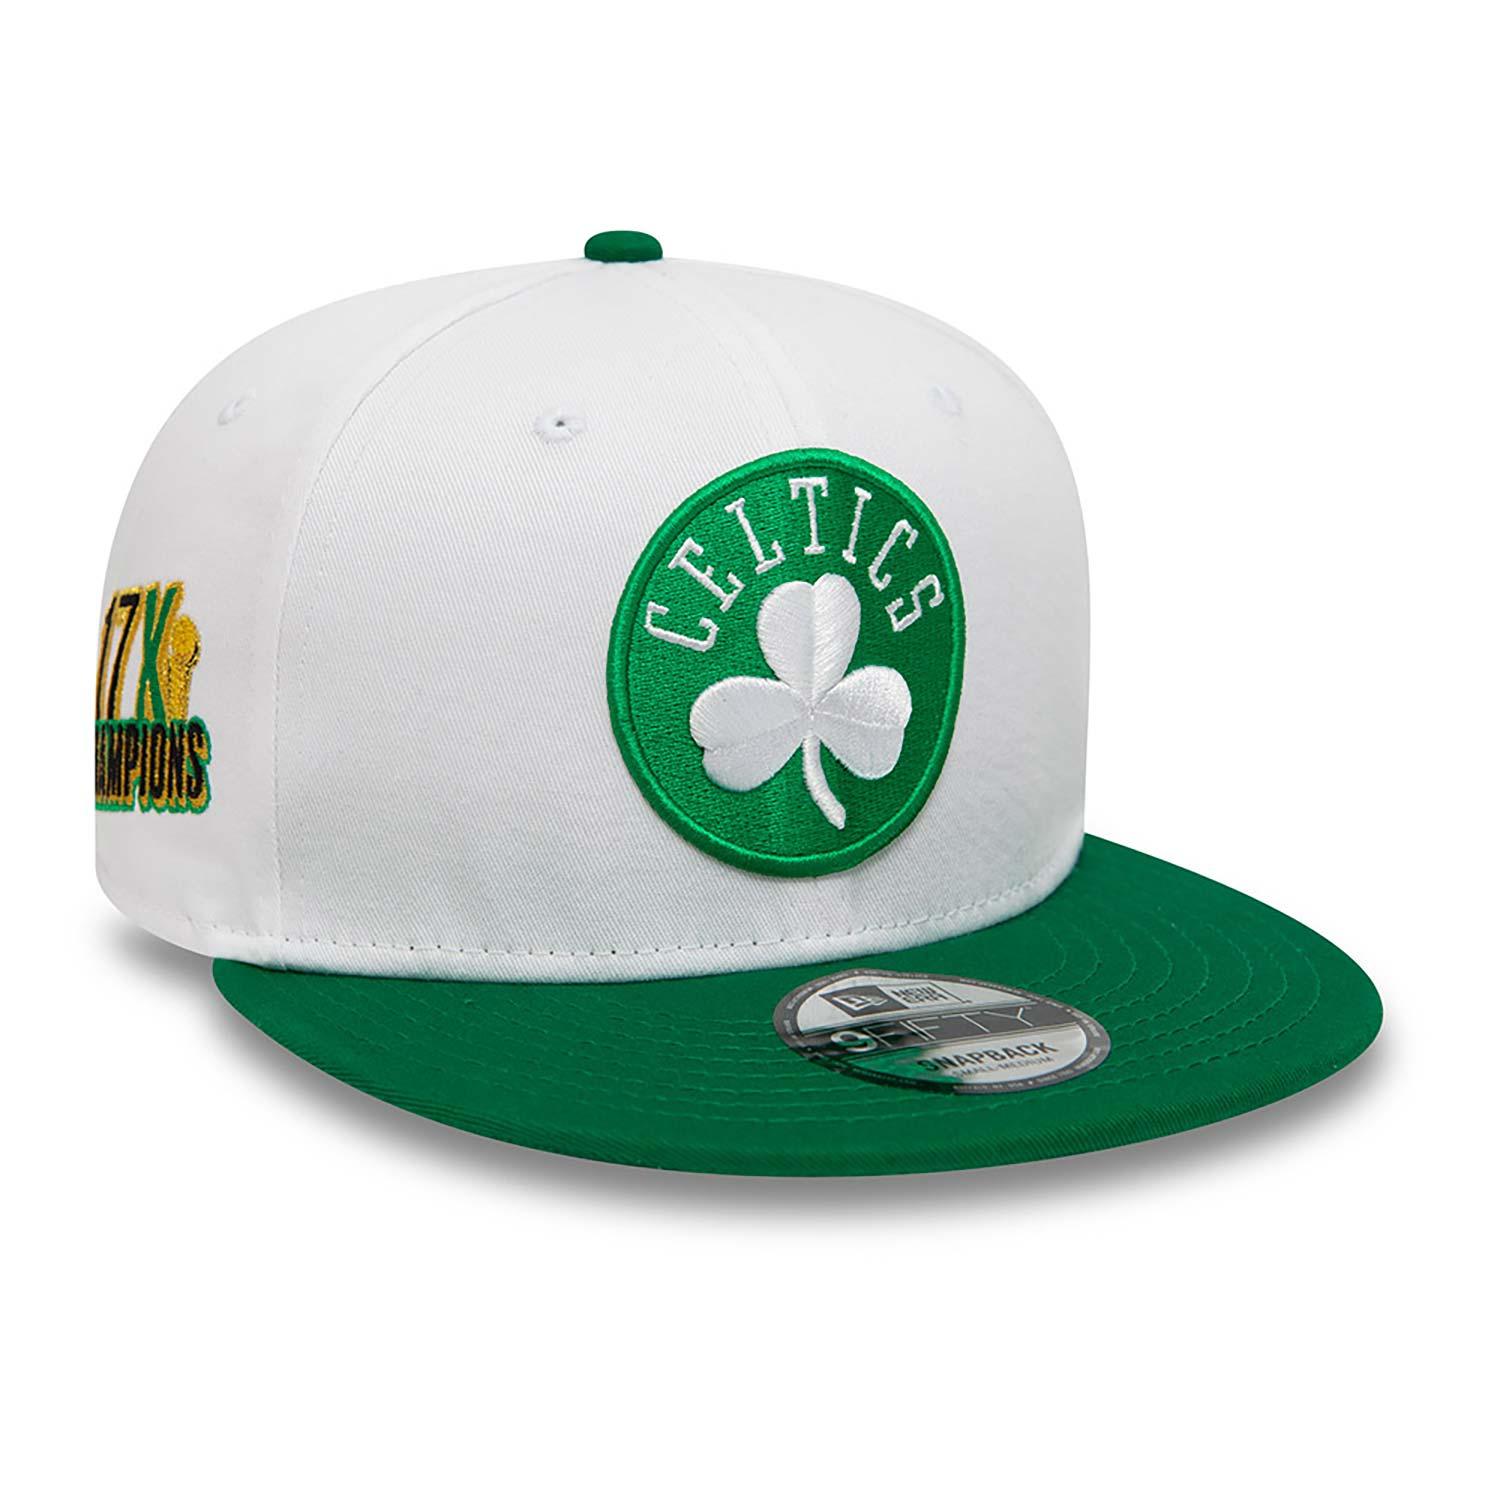 Official Boston Celtics New Era Hats, Snapbacks, Fitted Hats